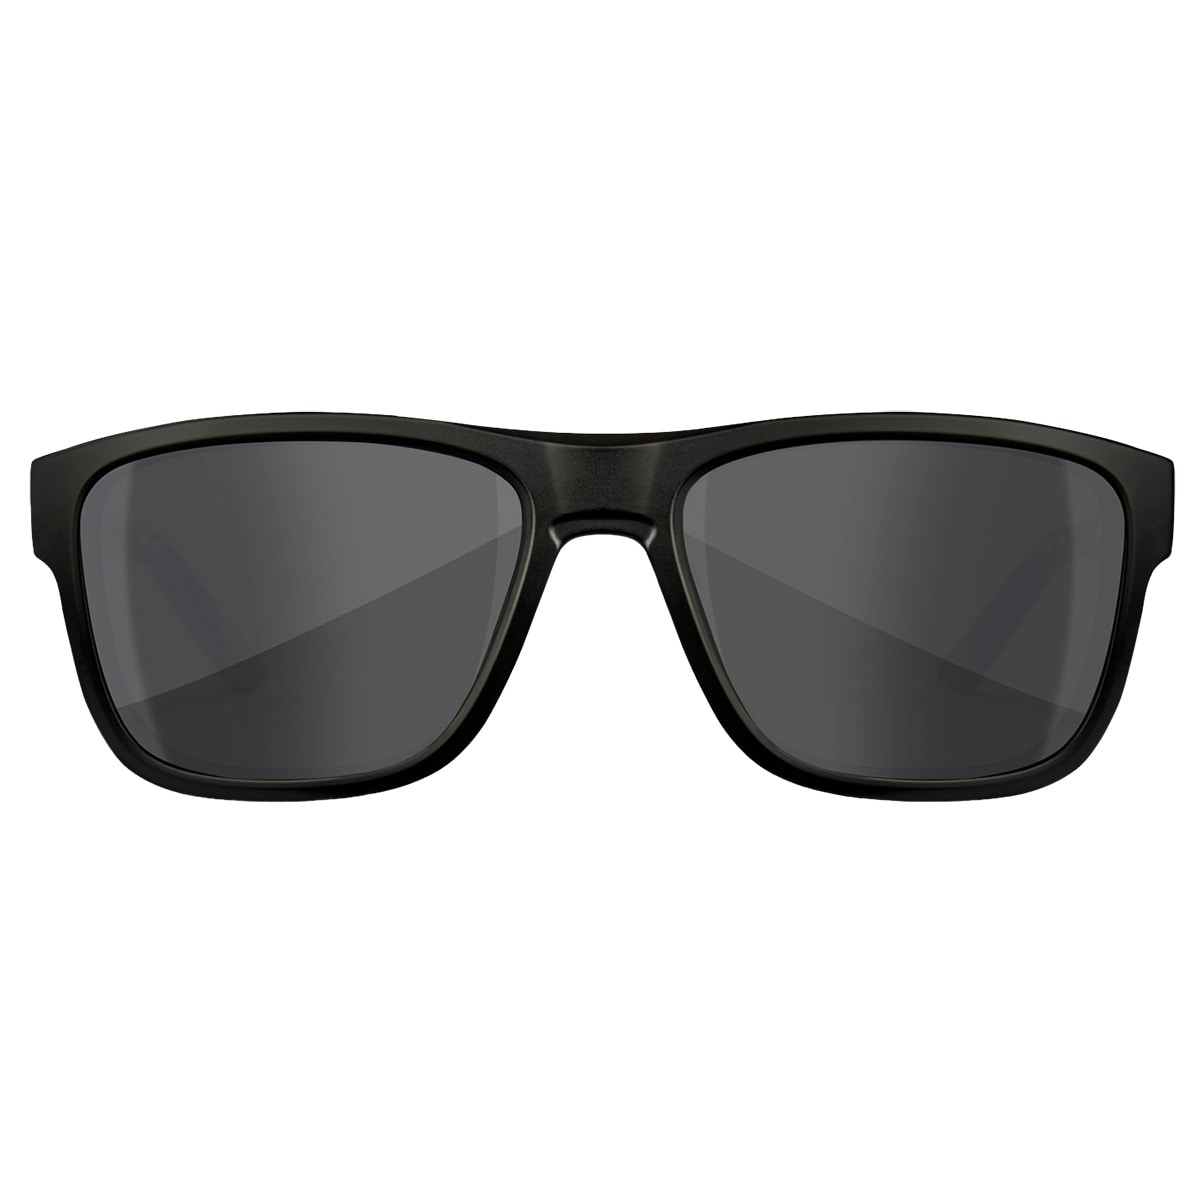 Okulary Wiley X Ovation - Grey/Matte Black